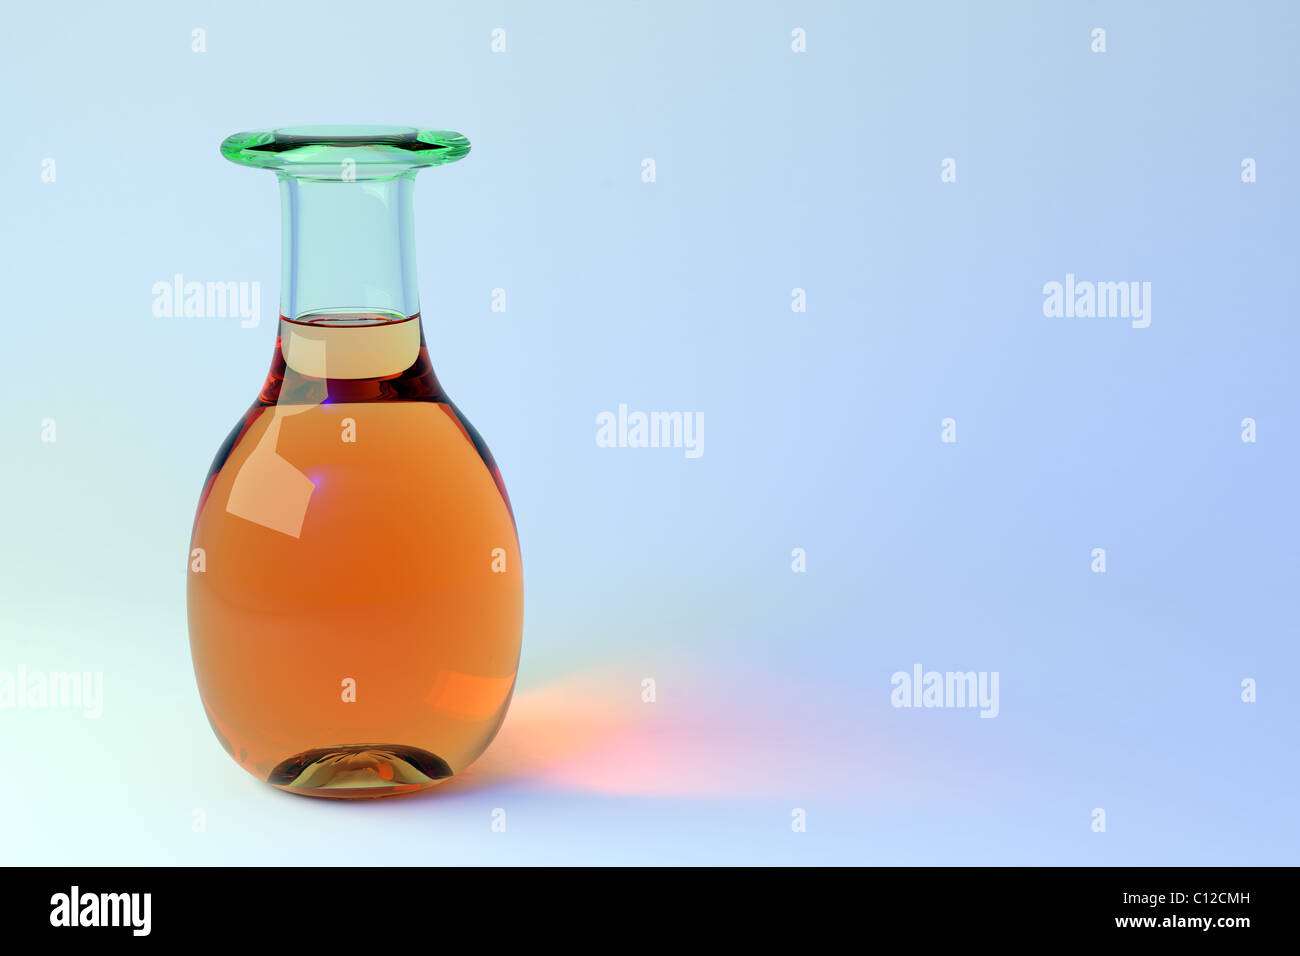 Glass bottle with auburn liquid Stock Photo